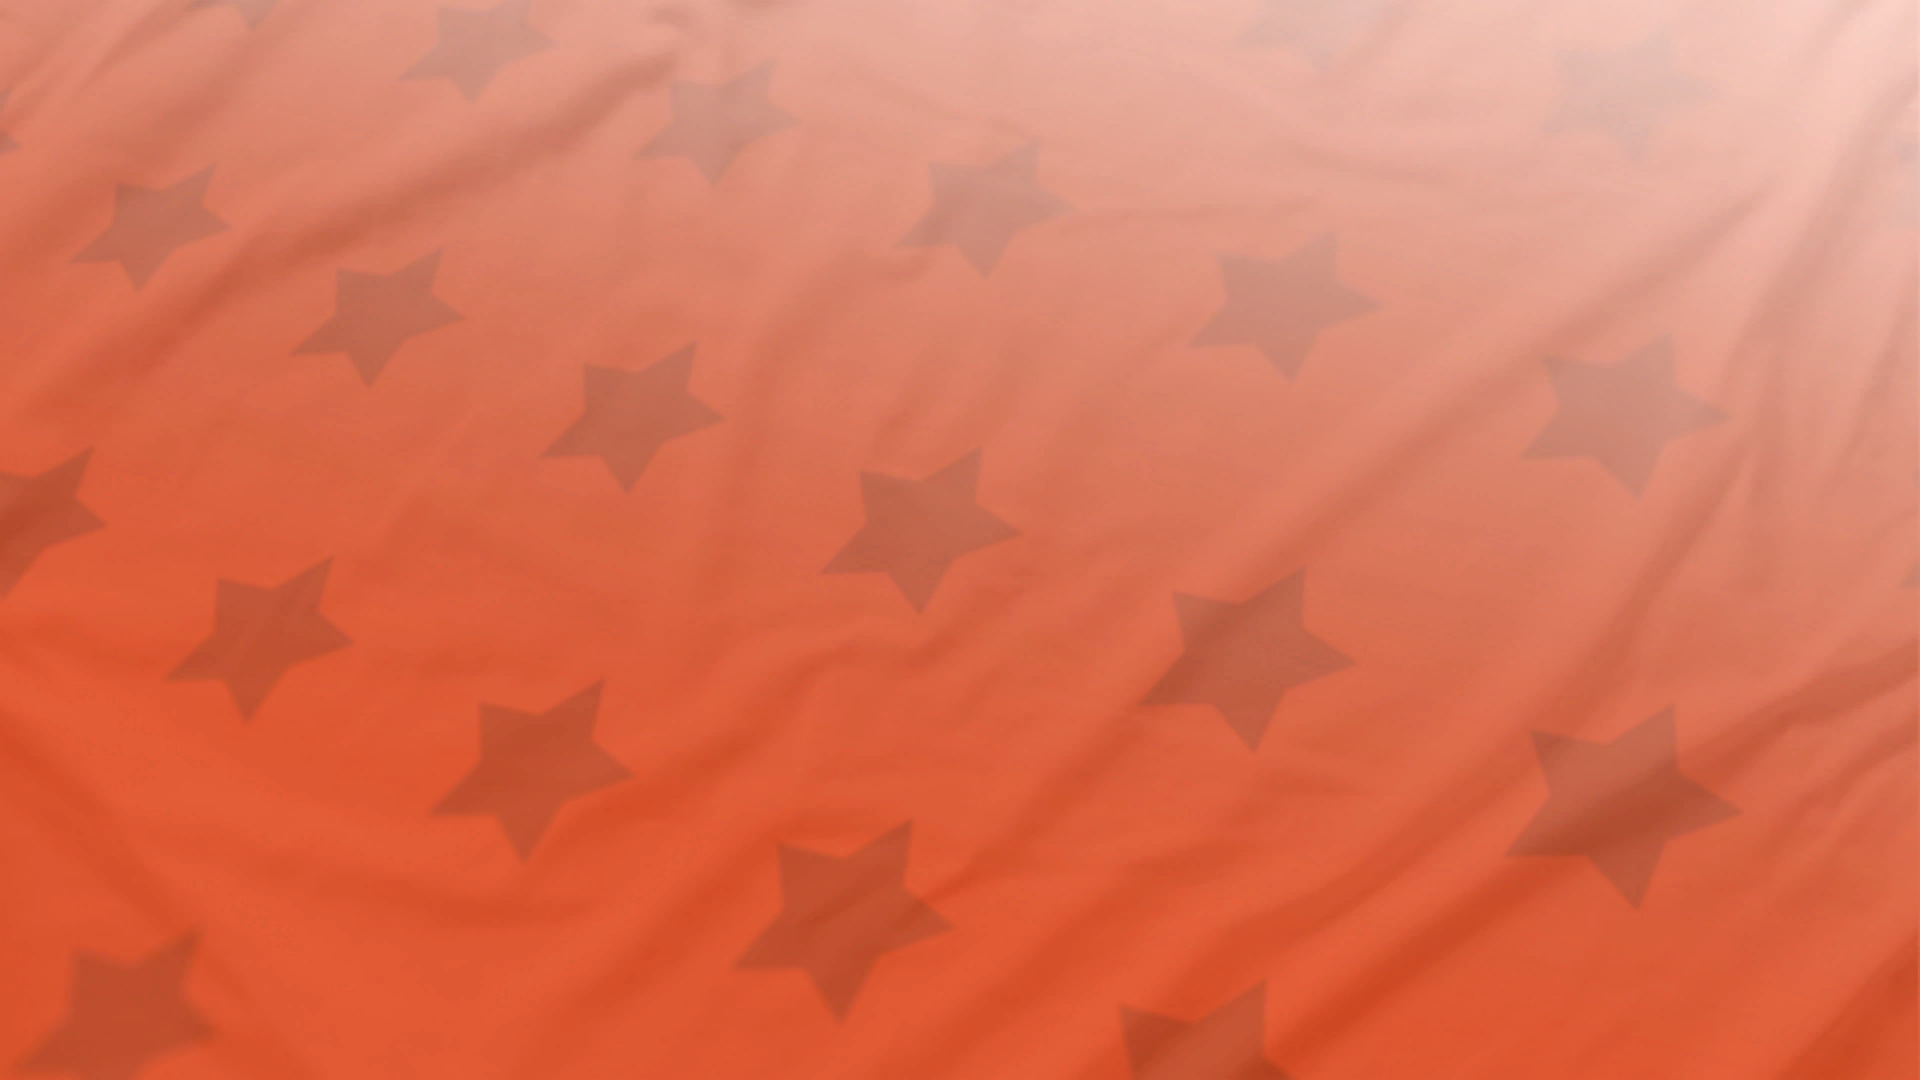 Advance Wars 1+2: Re-Boot Camp - Character Unlock Background - Orange Star